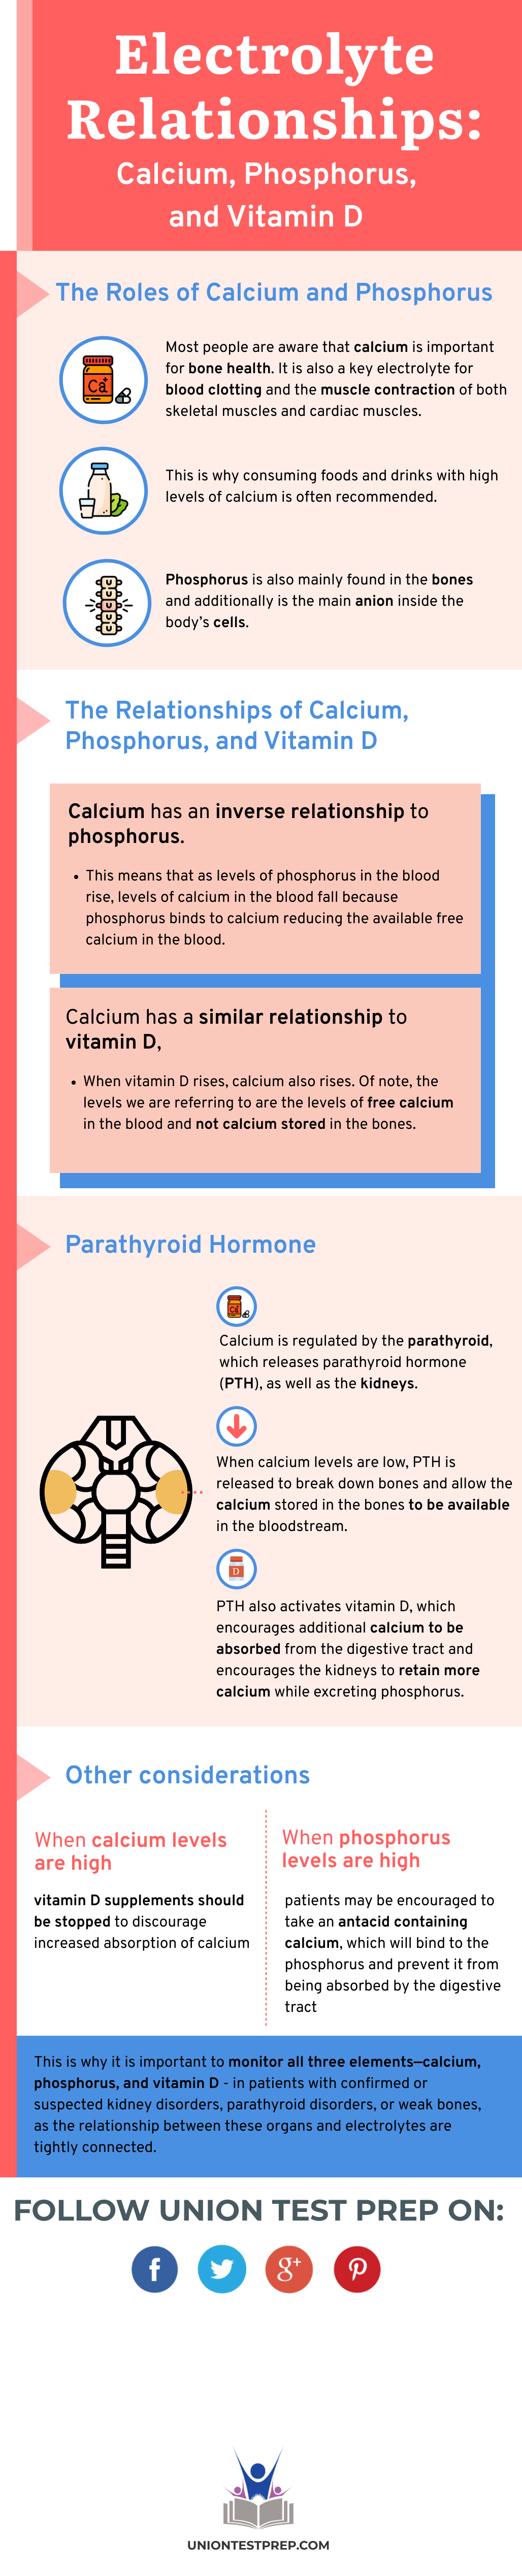 Relationship Between Calcium, Phosphorus, and Vitamin D